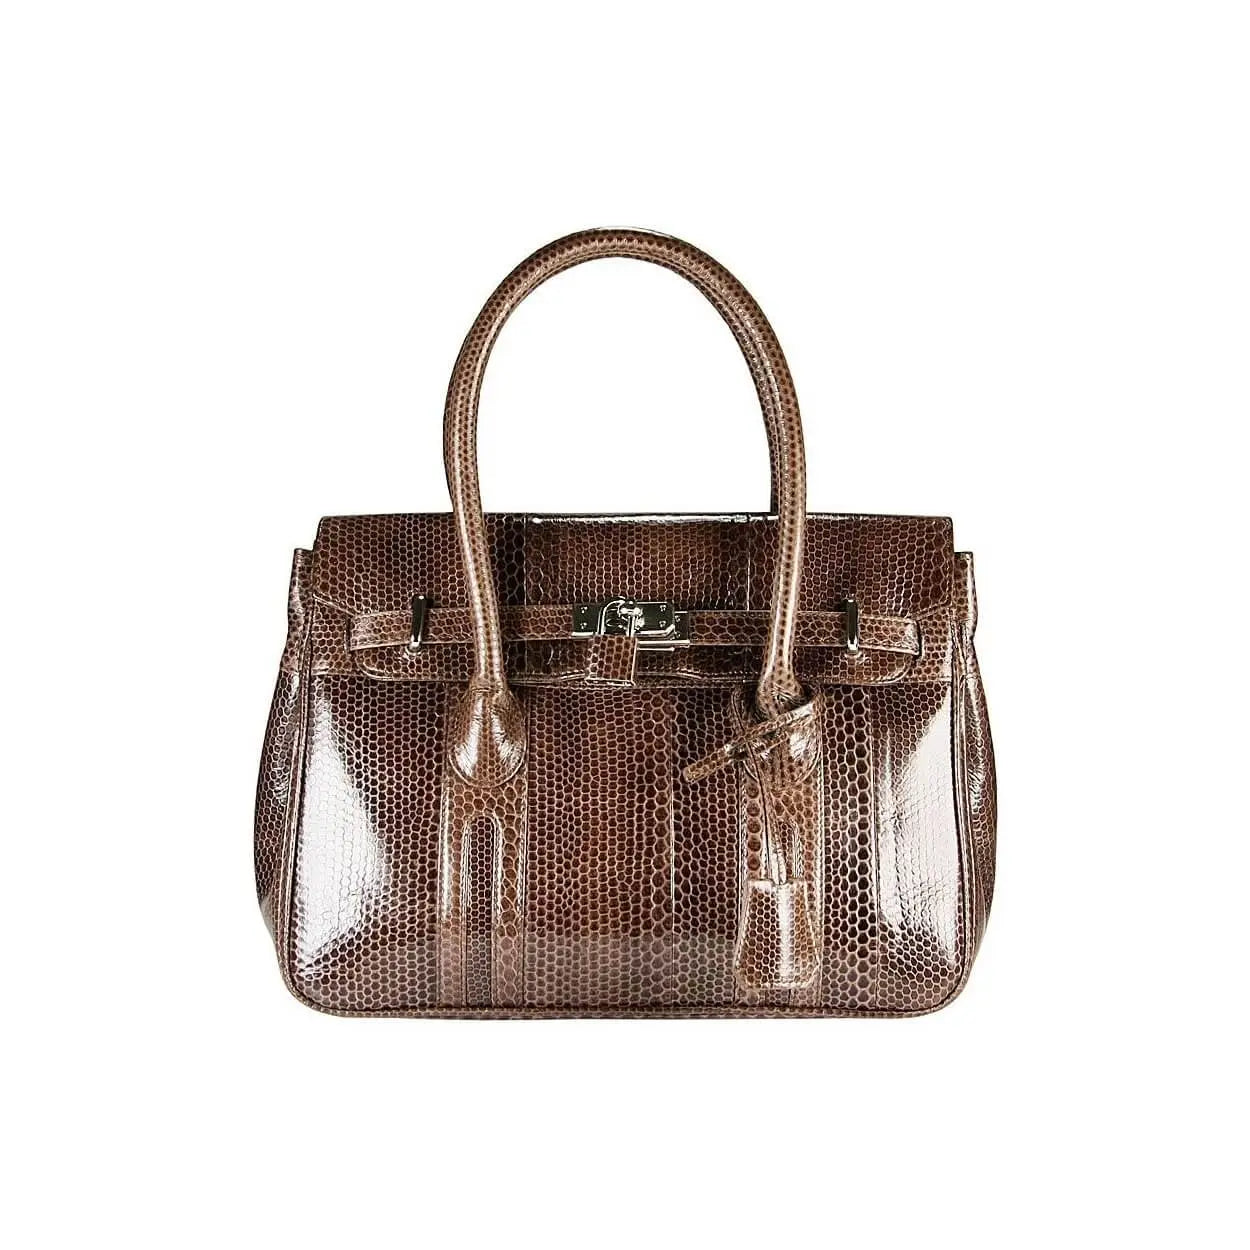 Snake Leather brown color Ladies Handbag by DeLeo One